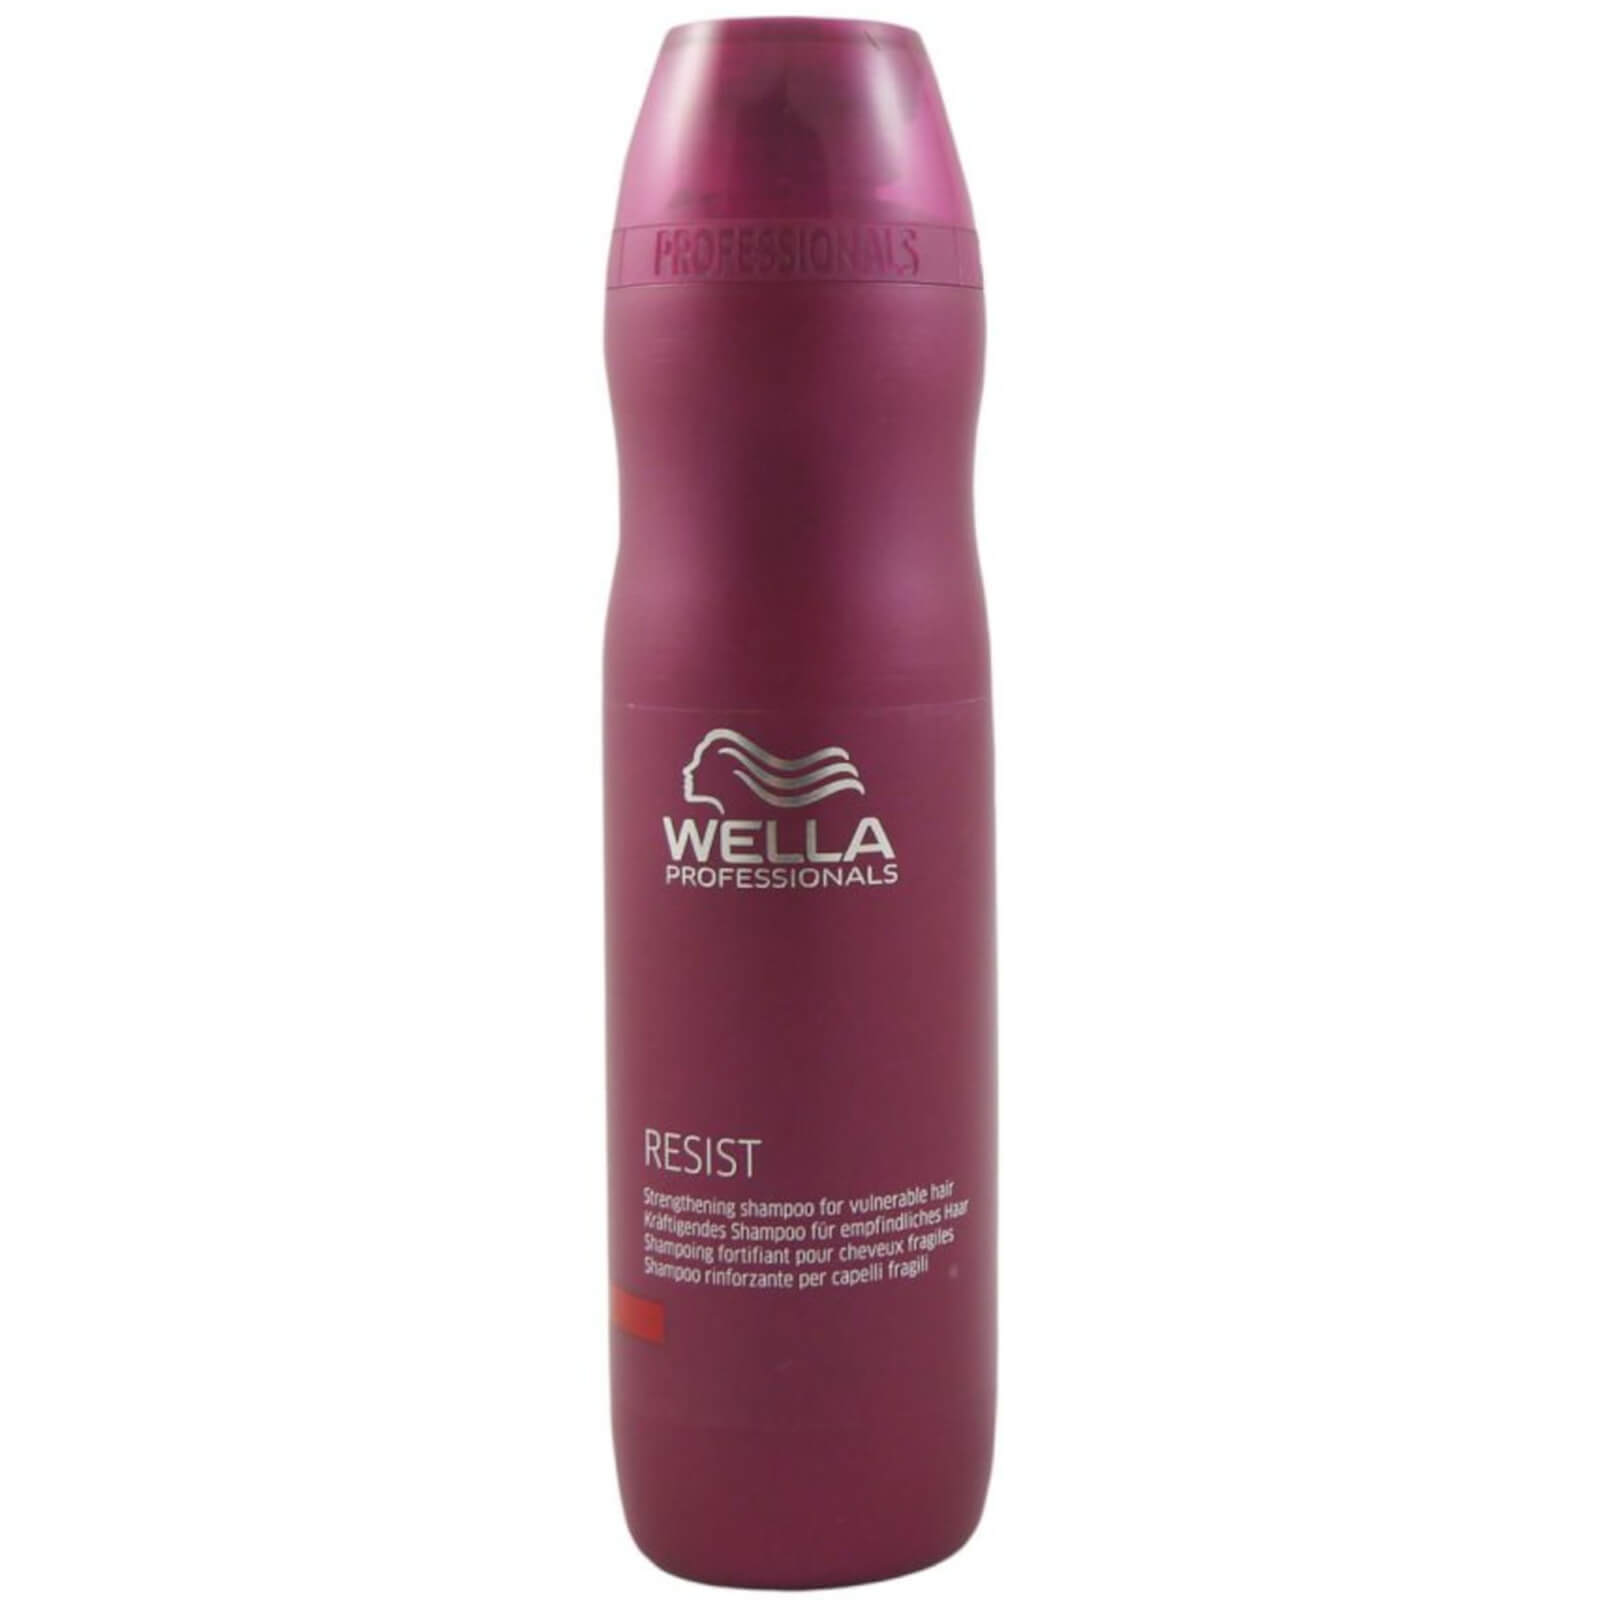 Champú fortalecedor para cabello frágil Wella Professionals Resist Strengthening Shampoo For Vulnerable Hair